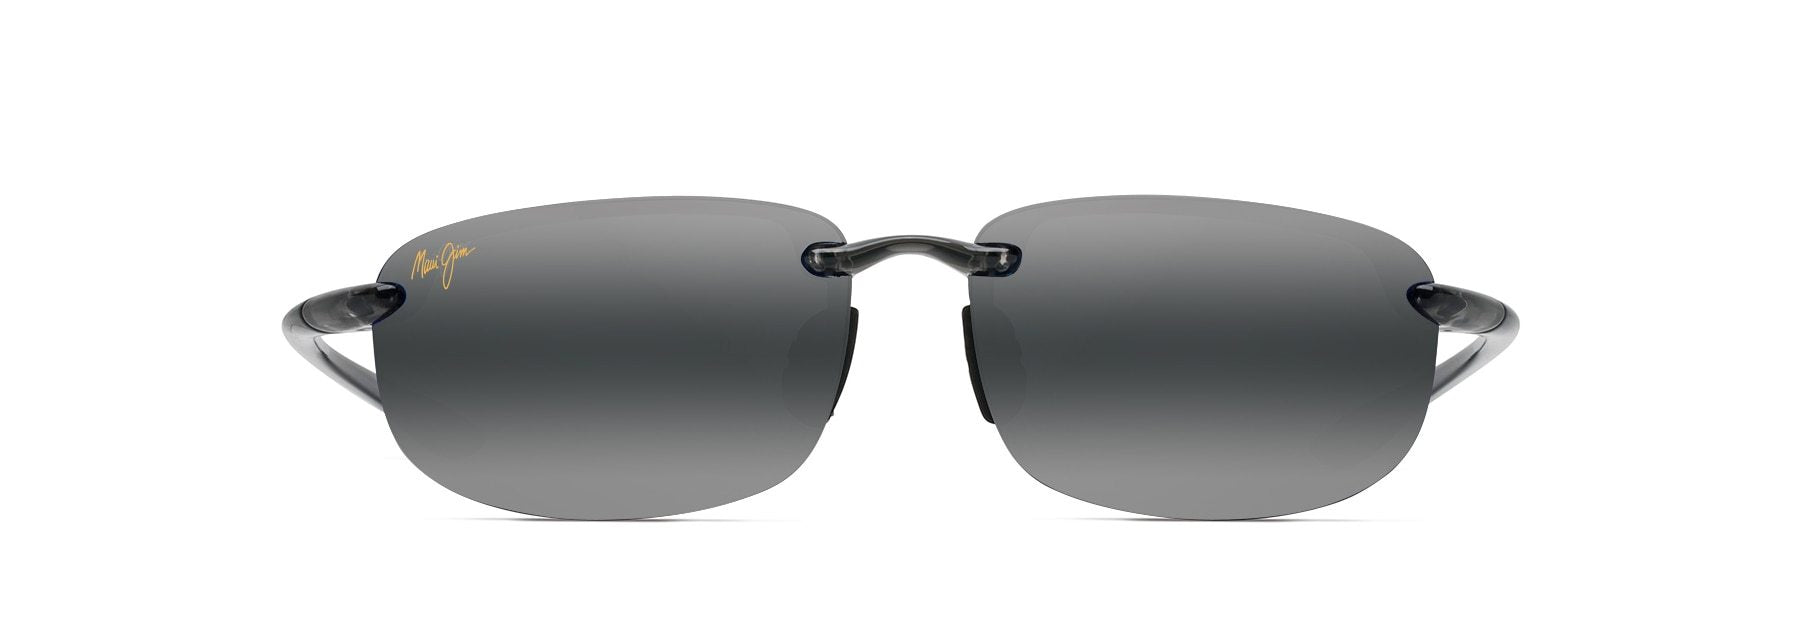 MyMaui Ho'Okipa MM407-013 Sunglasses